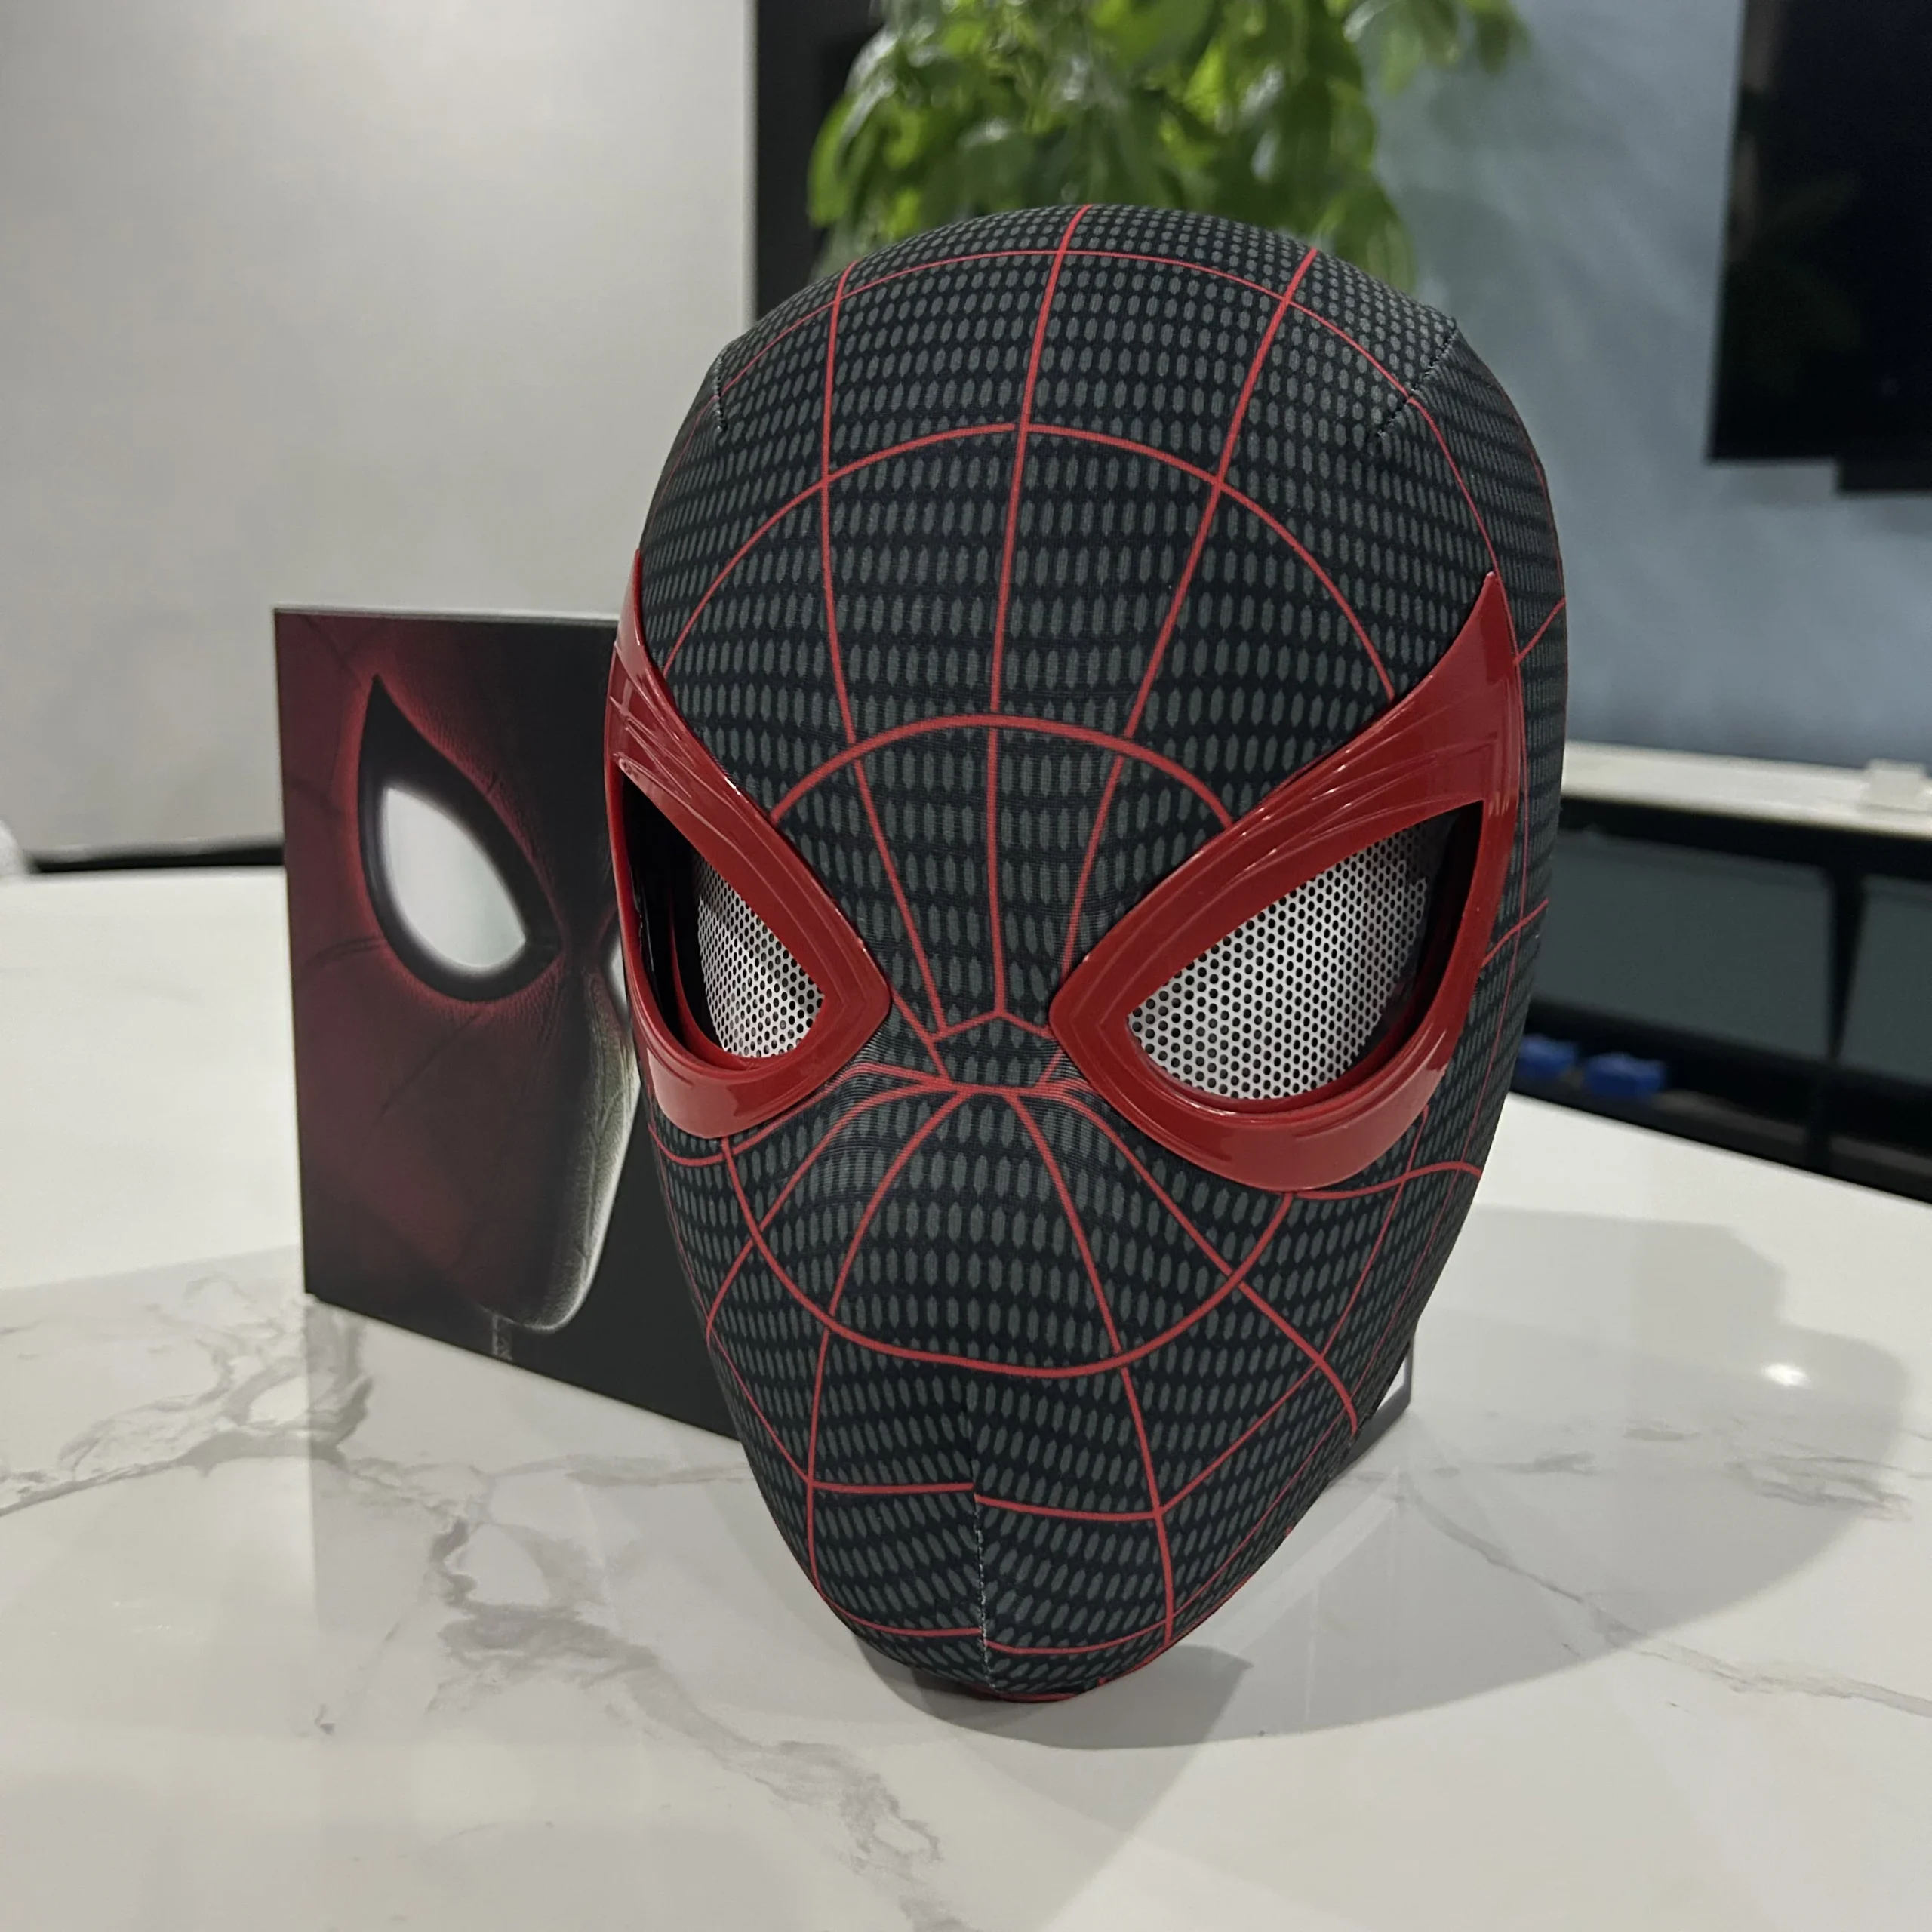 Spiderman Mask 1